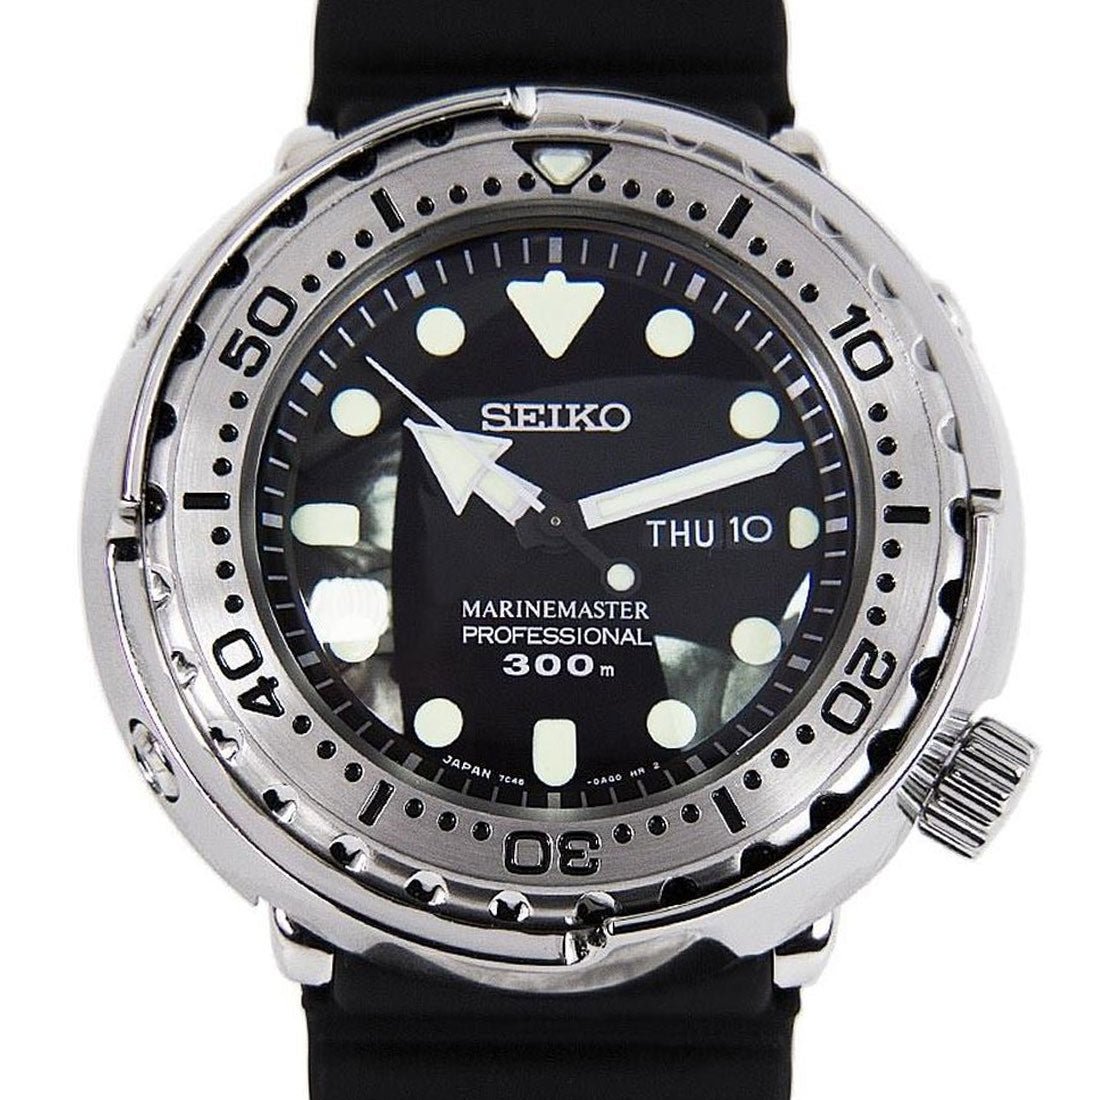 Seiko Prospex Marine Master JDM Scuba Divers Watch SBBN033 -Seiko